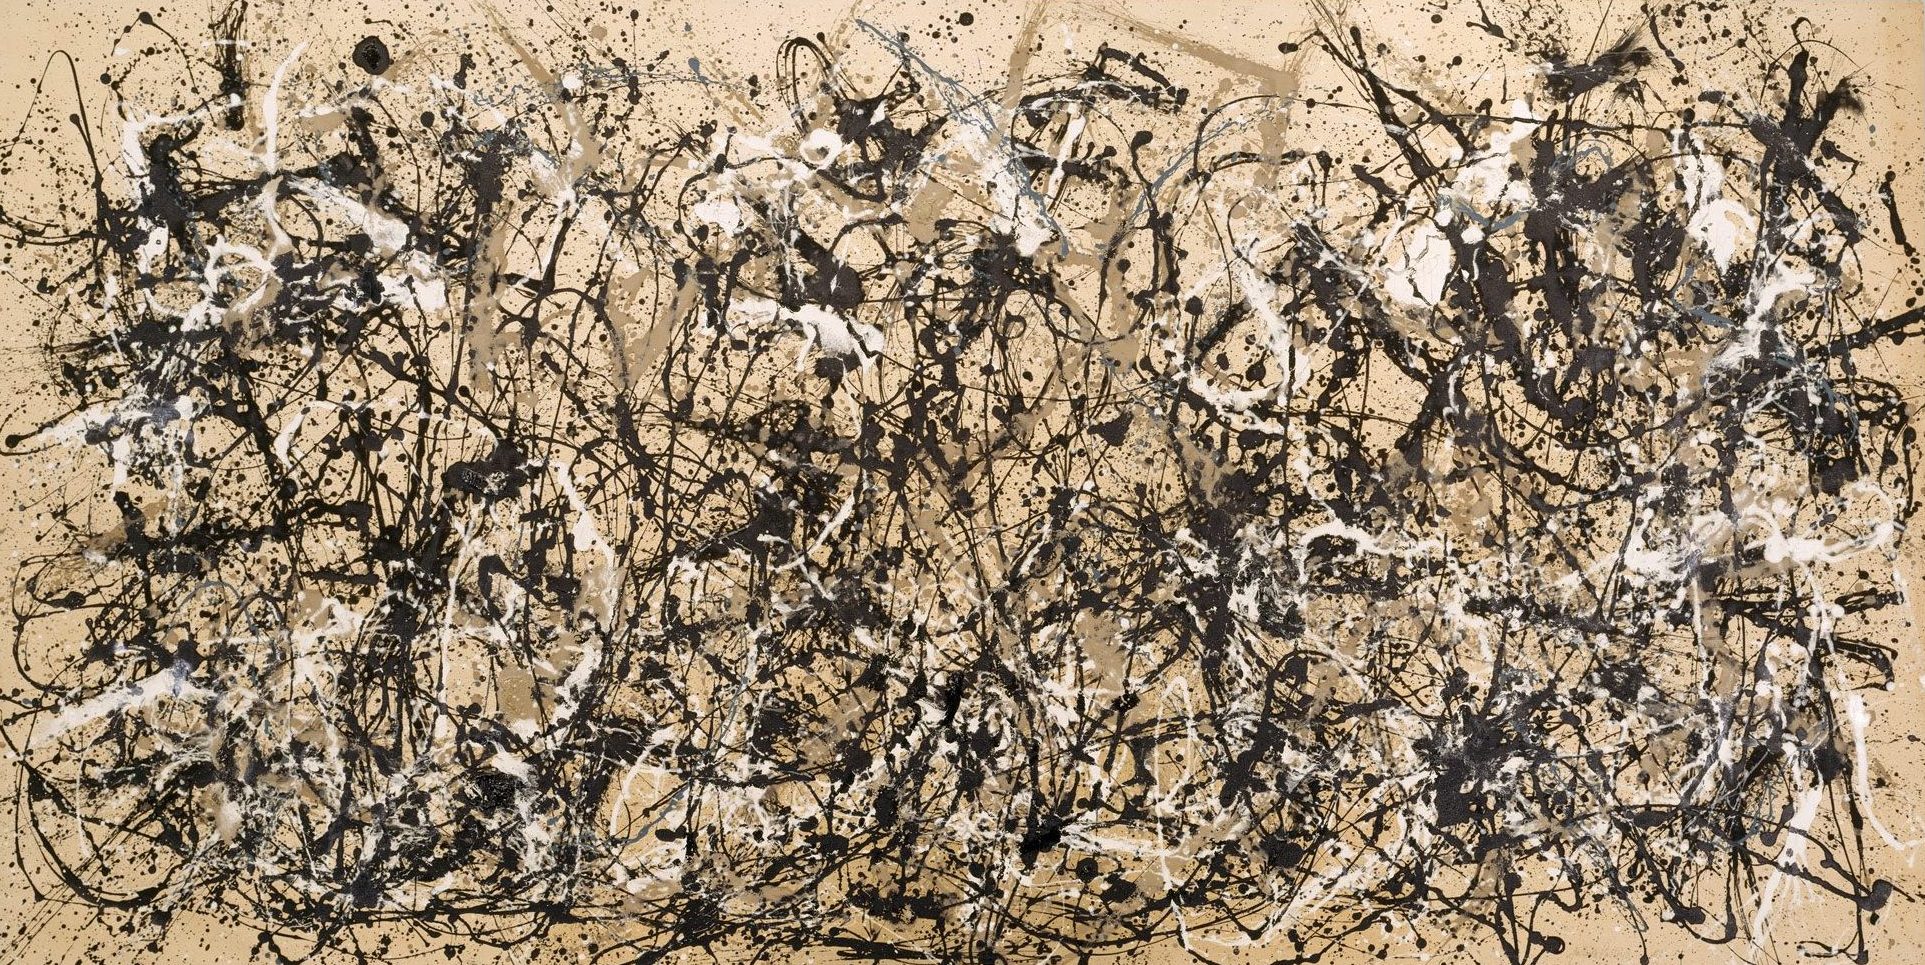 Jackson Pollock, Autumn Rhythm (Number 30), 1950, enamel on canvas, 266.7 x 525.8 cm (The Metropolitan Museum of Art)